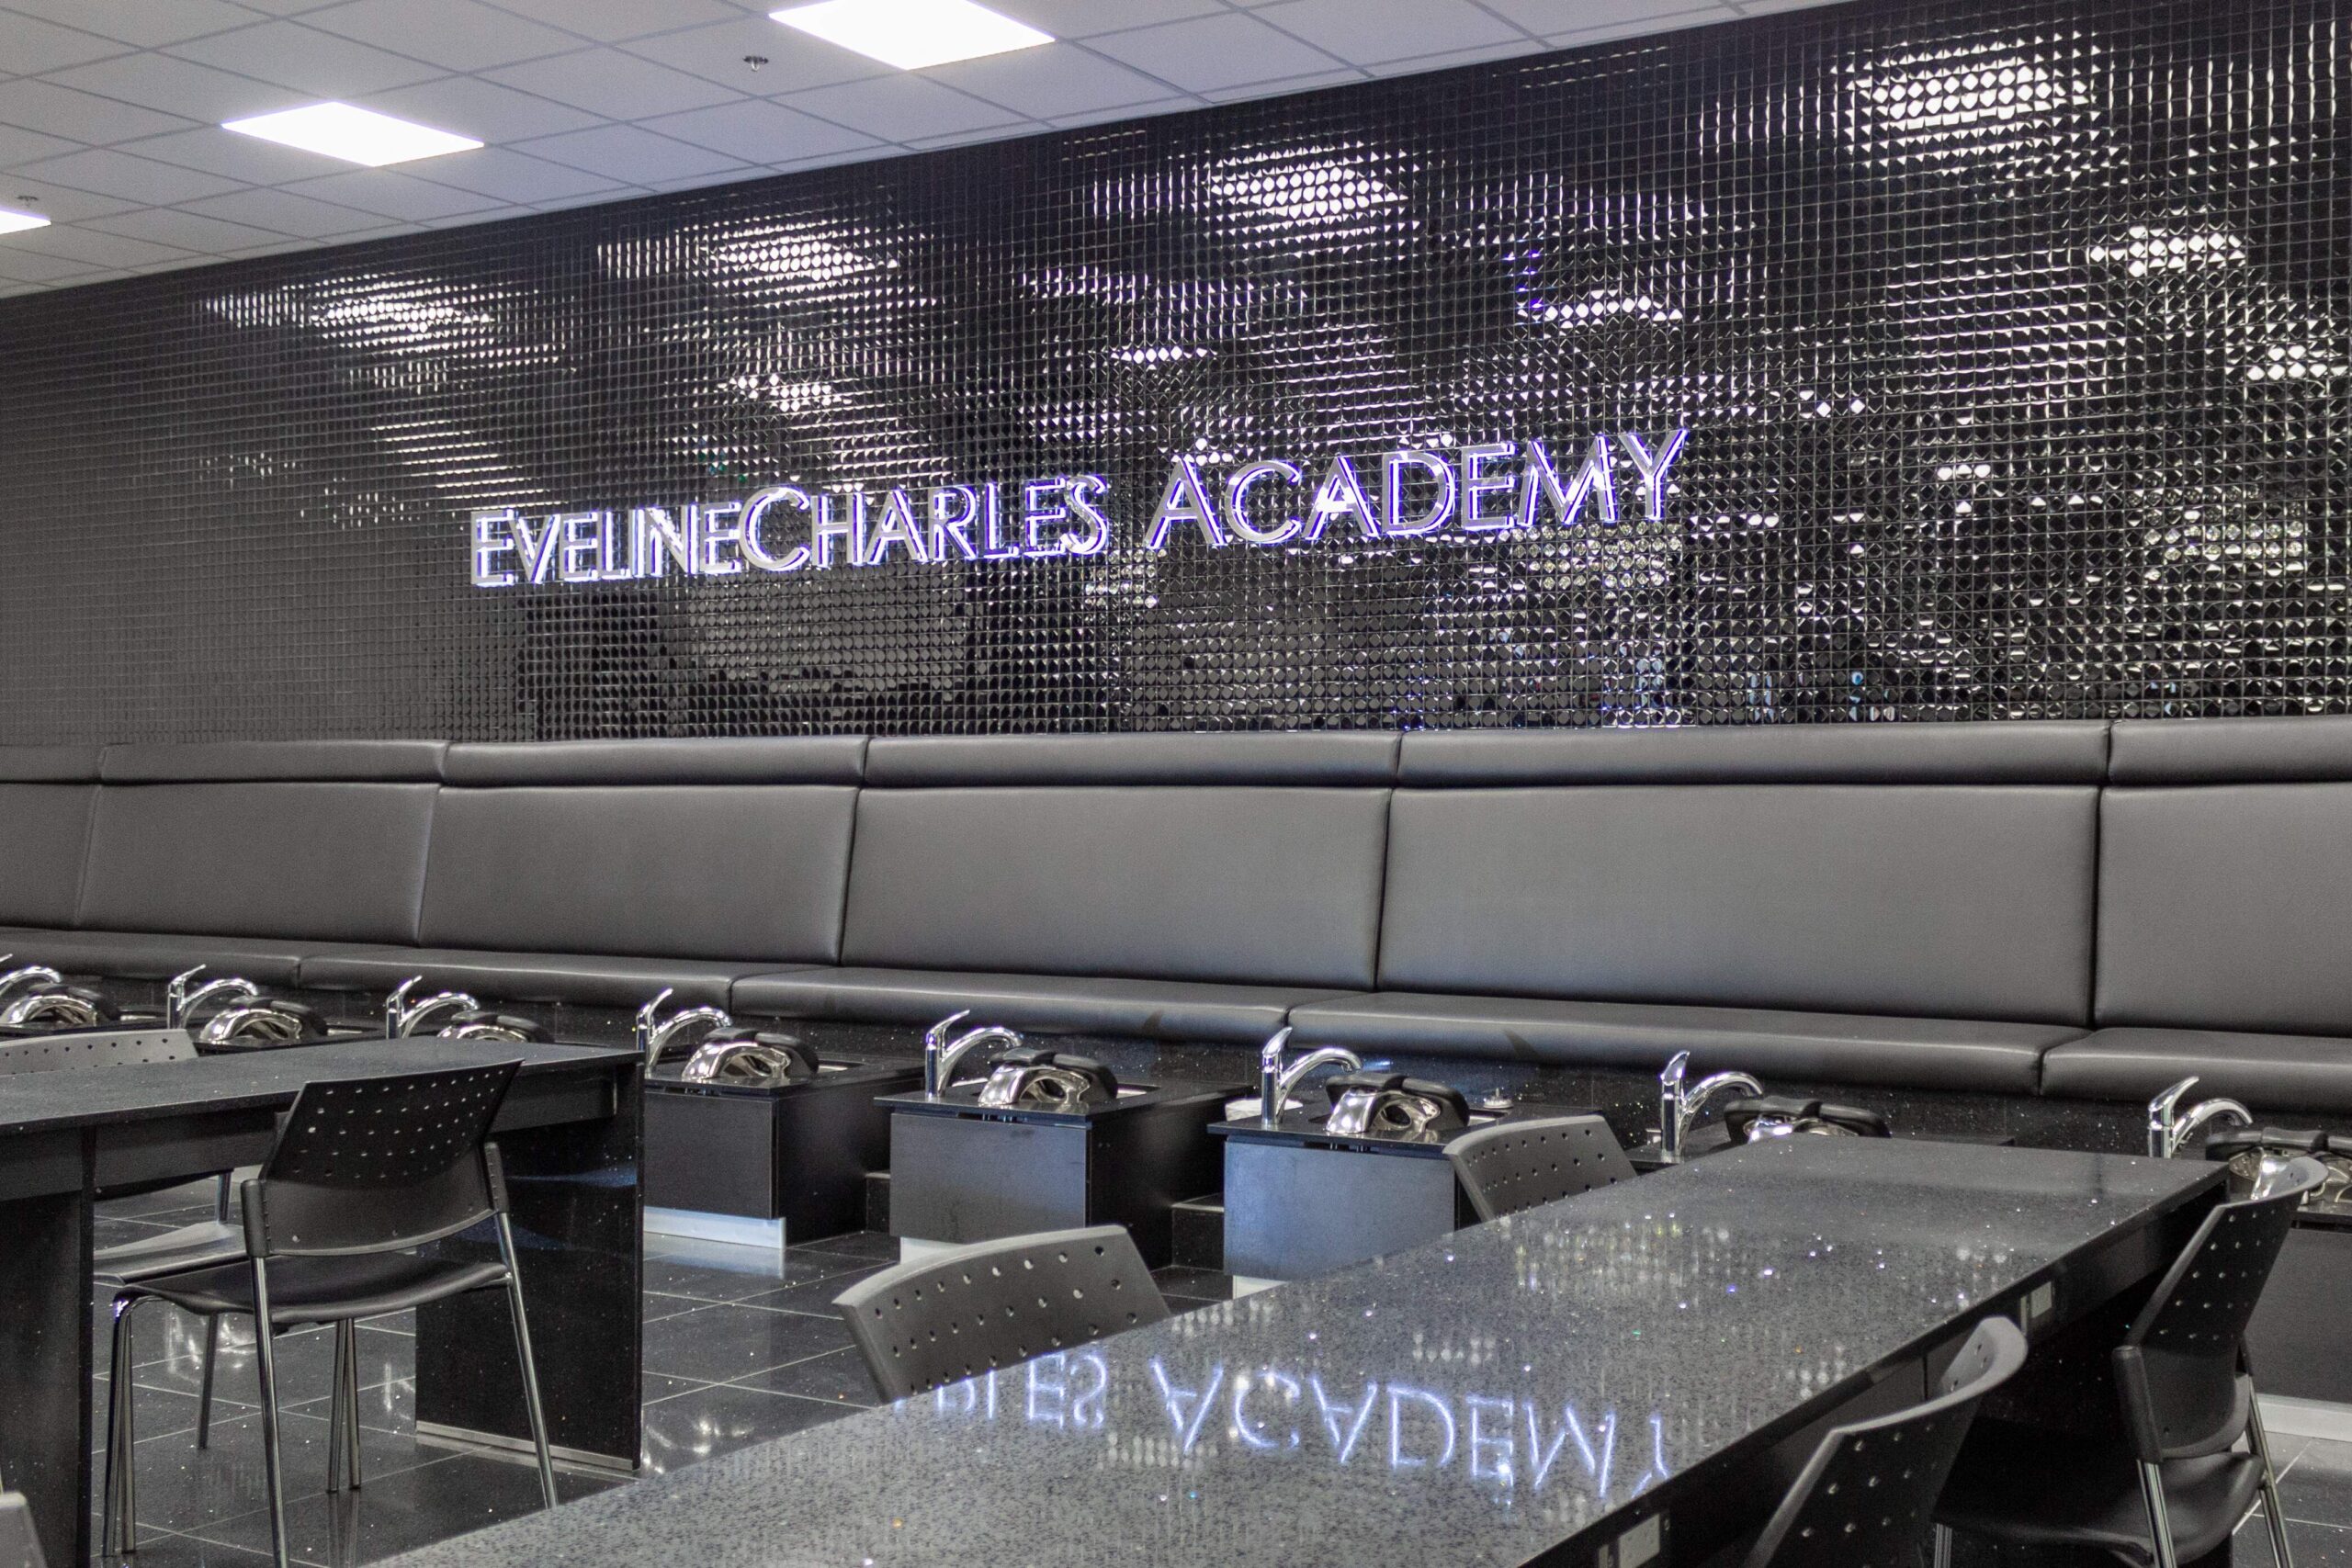 evelinecharles academy